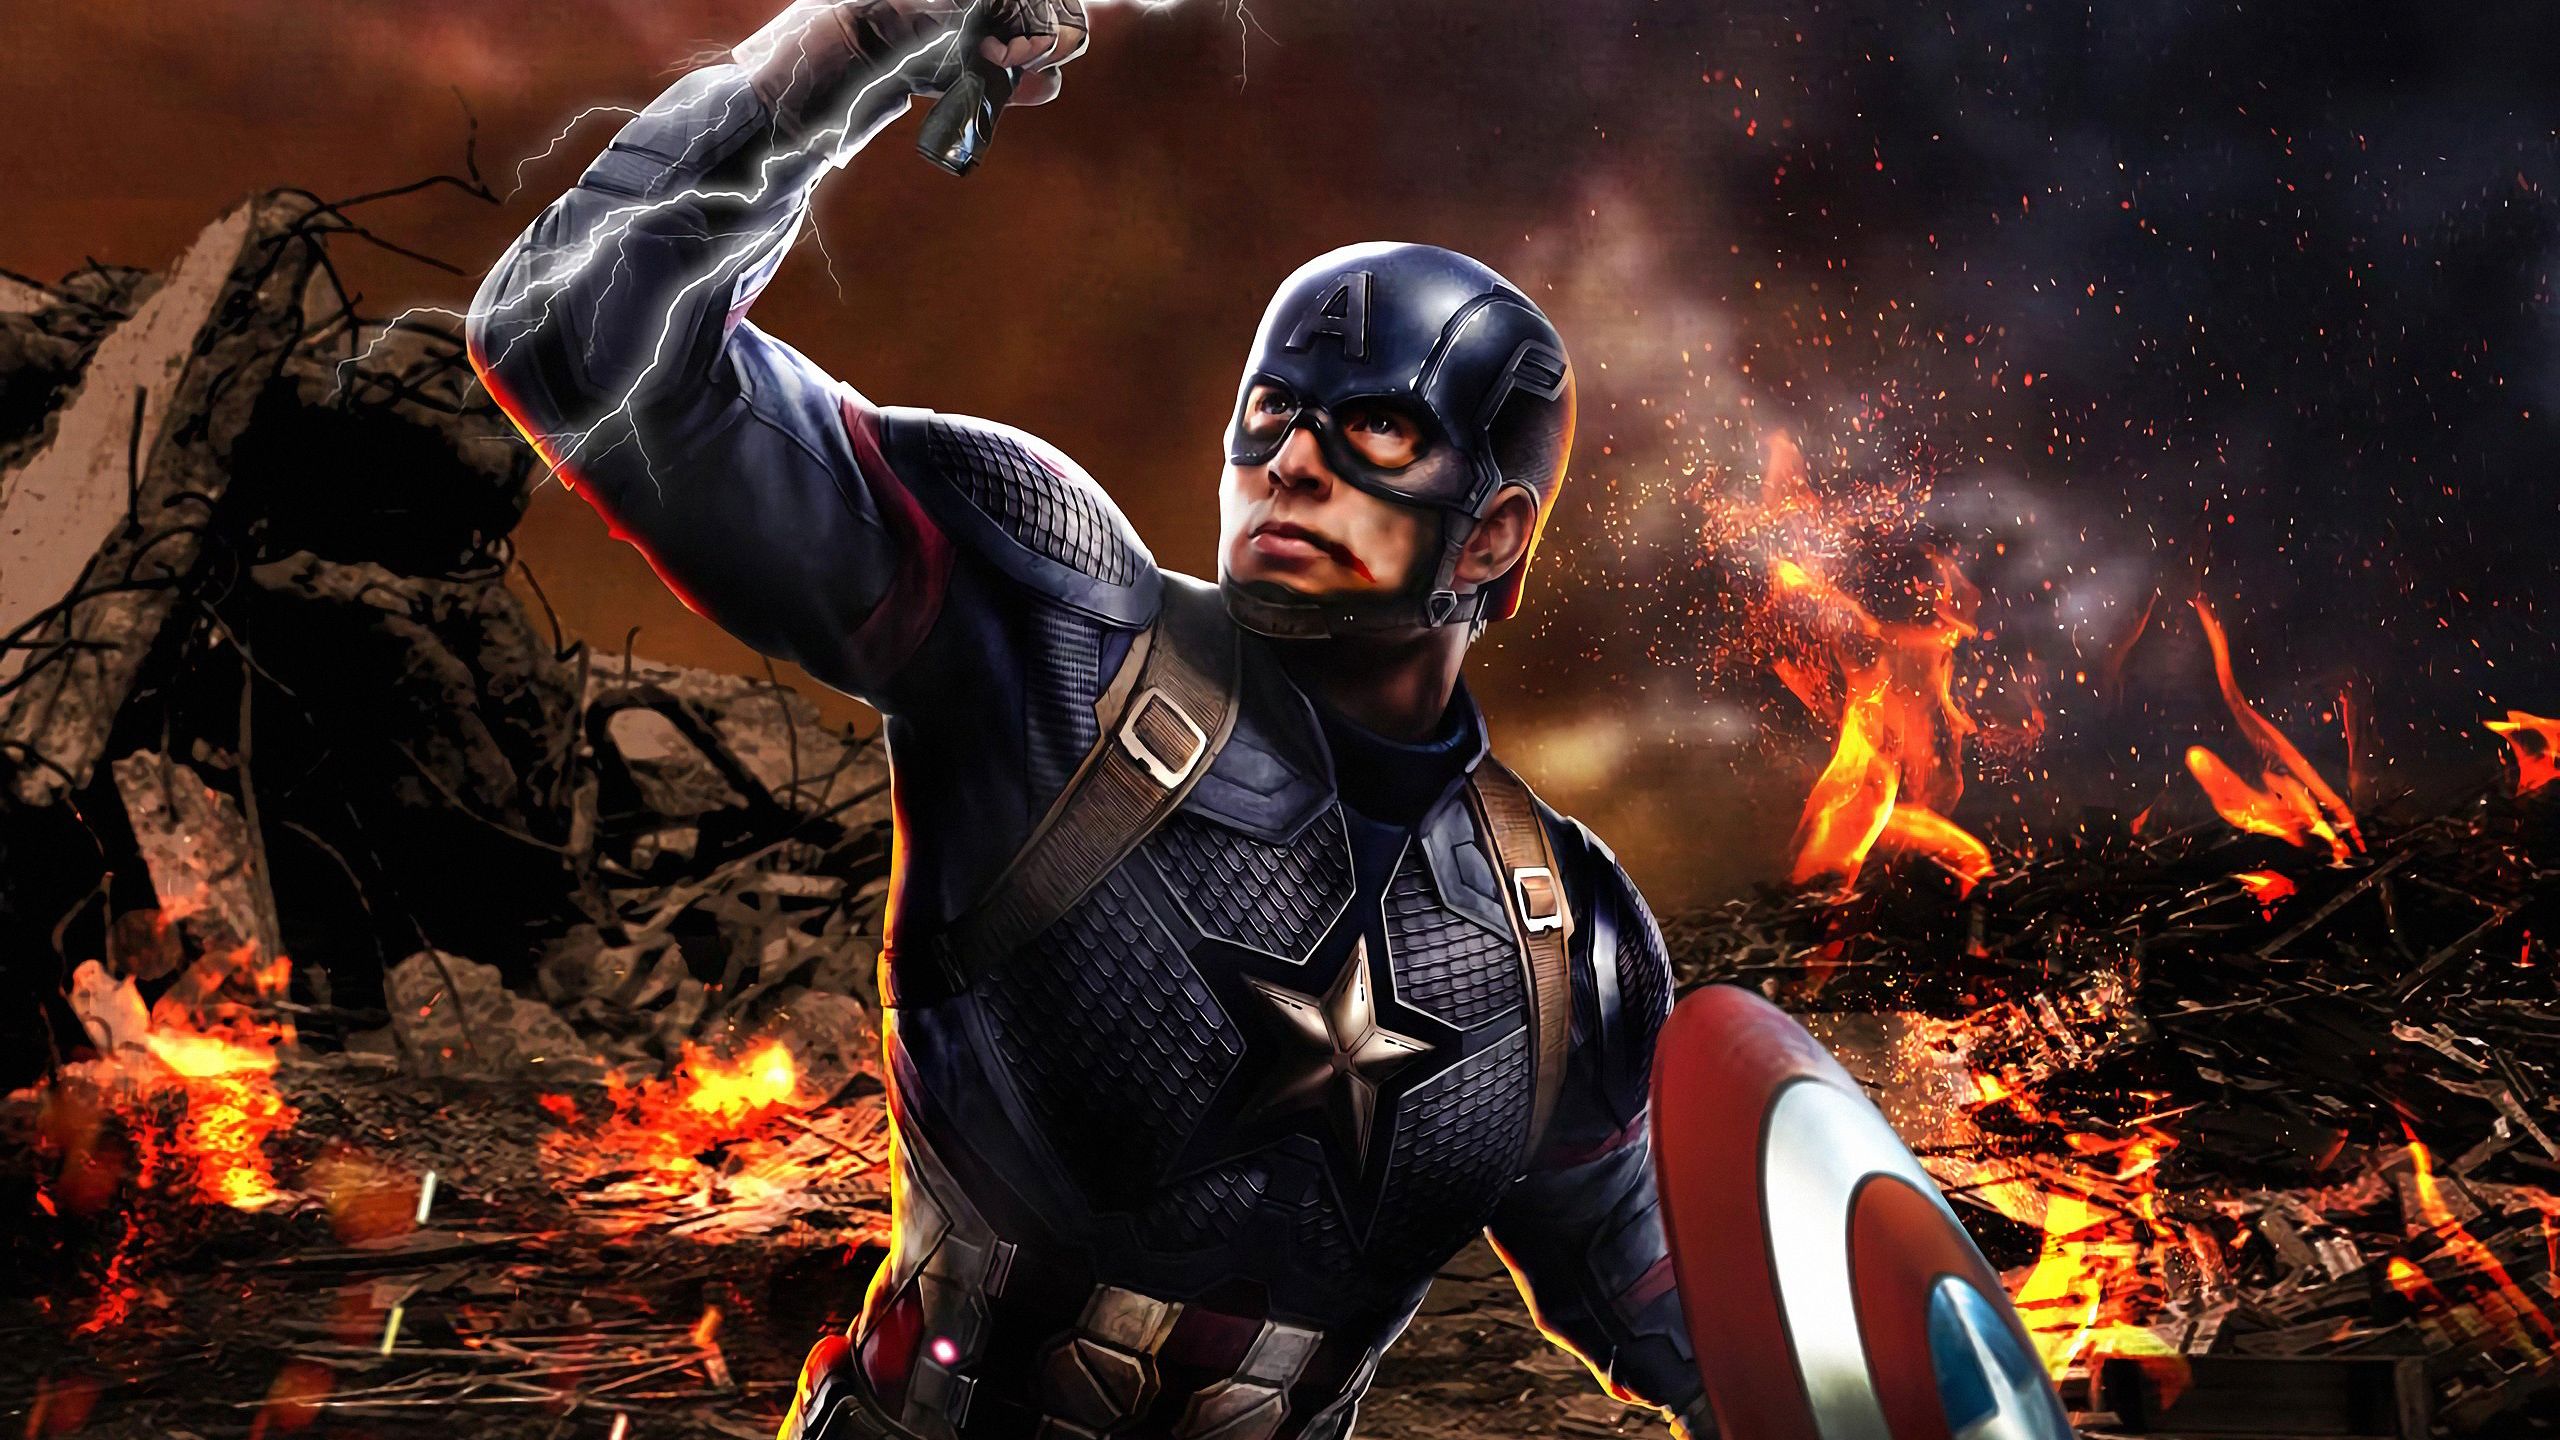 Captain America Avengers Endgame Mjolnir, HD Superheroes, 4k Wallpaper, Image, Background, Photo and Picture